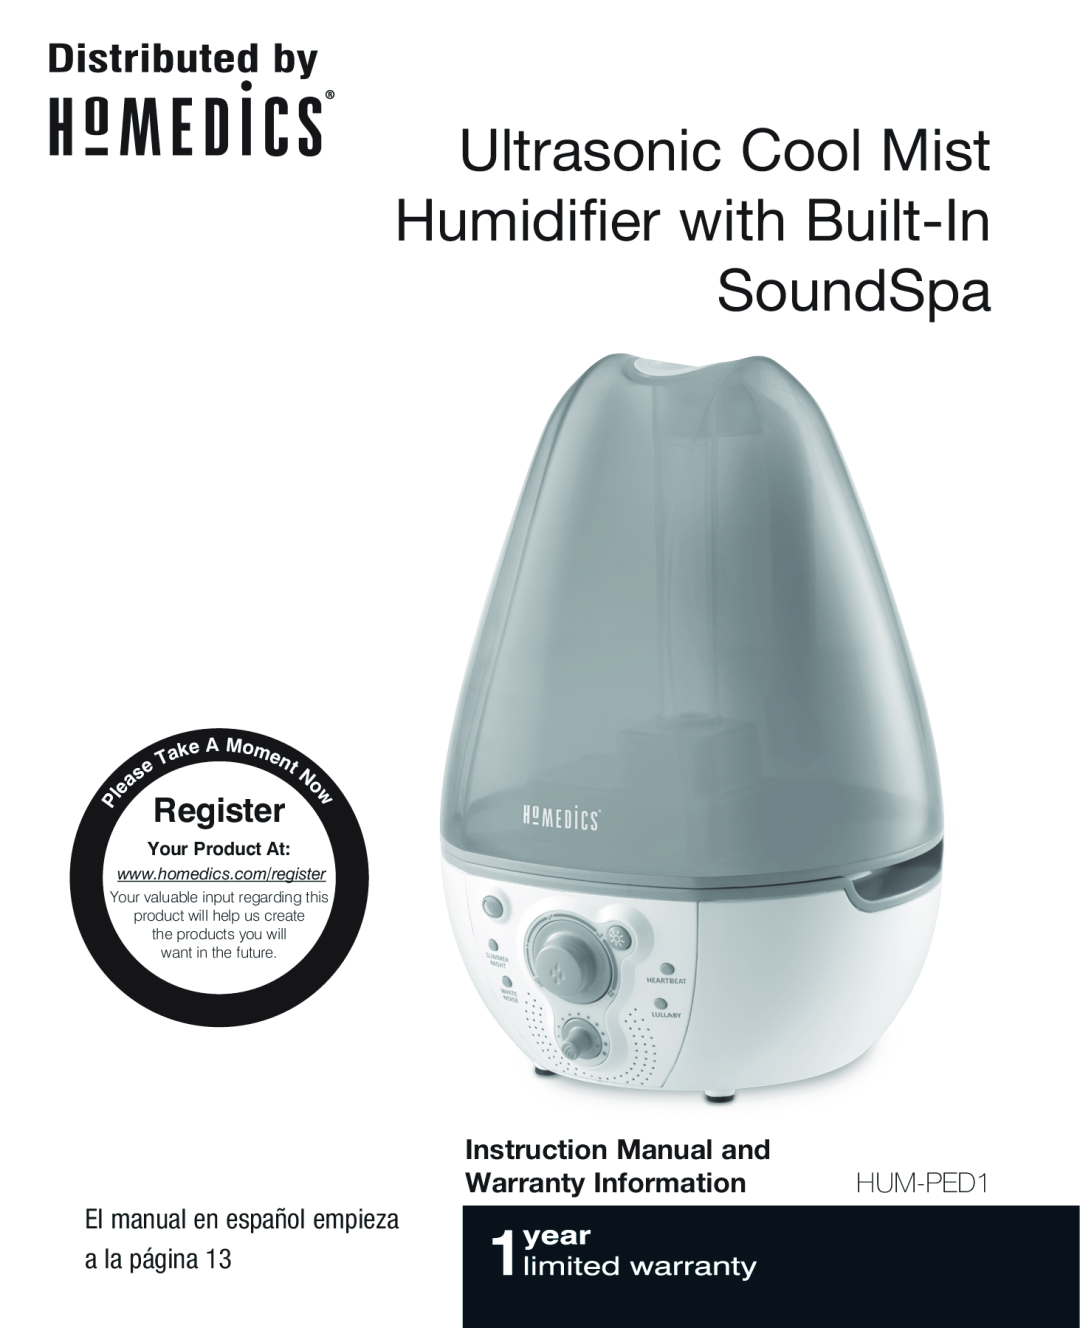 HoMedics HJM-PED1 instruction manual Ultrasonic Cool Mist Humidifier with Built-In, SoundSpa, Register, HUM-PED1, ke A Mo 